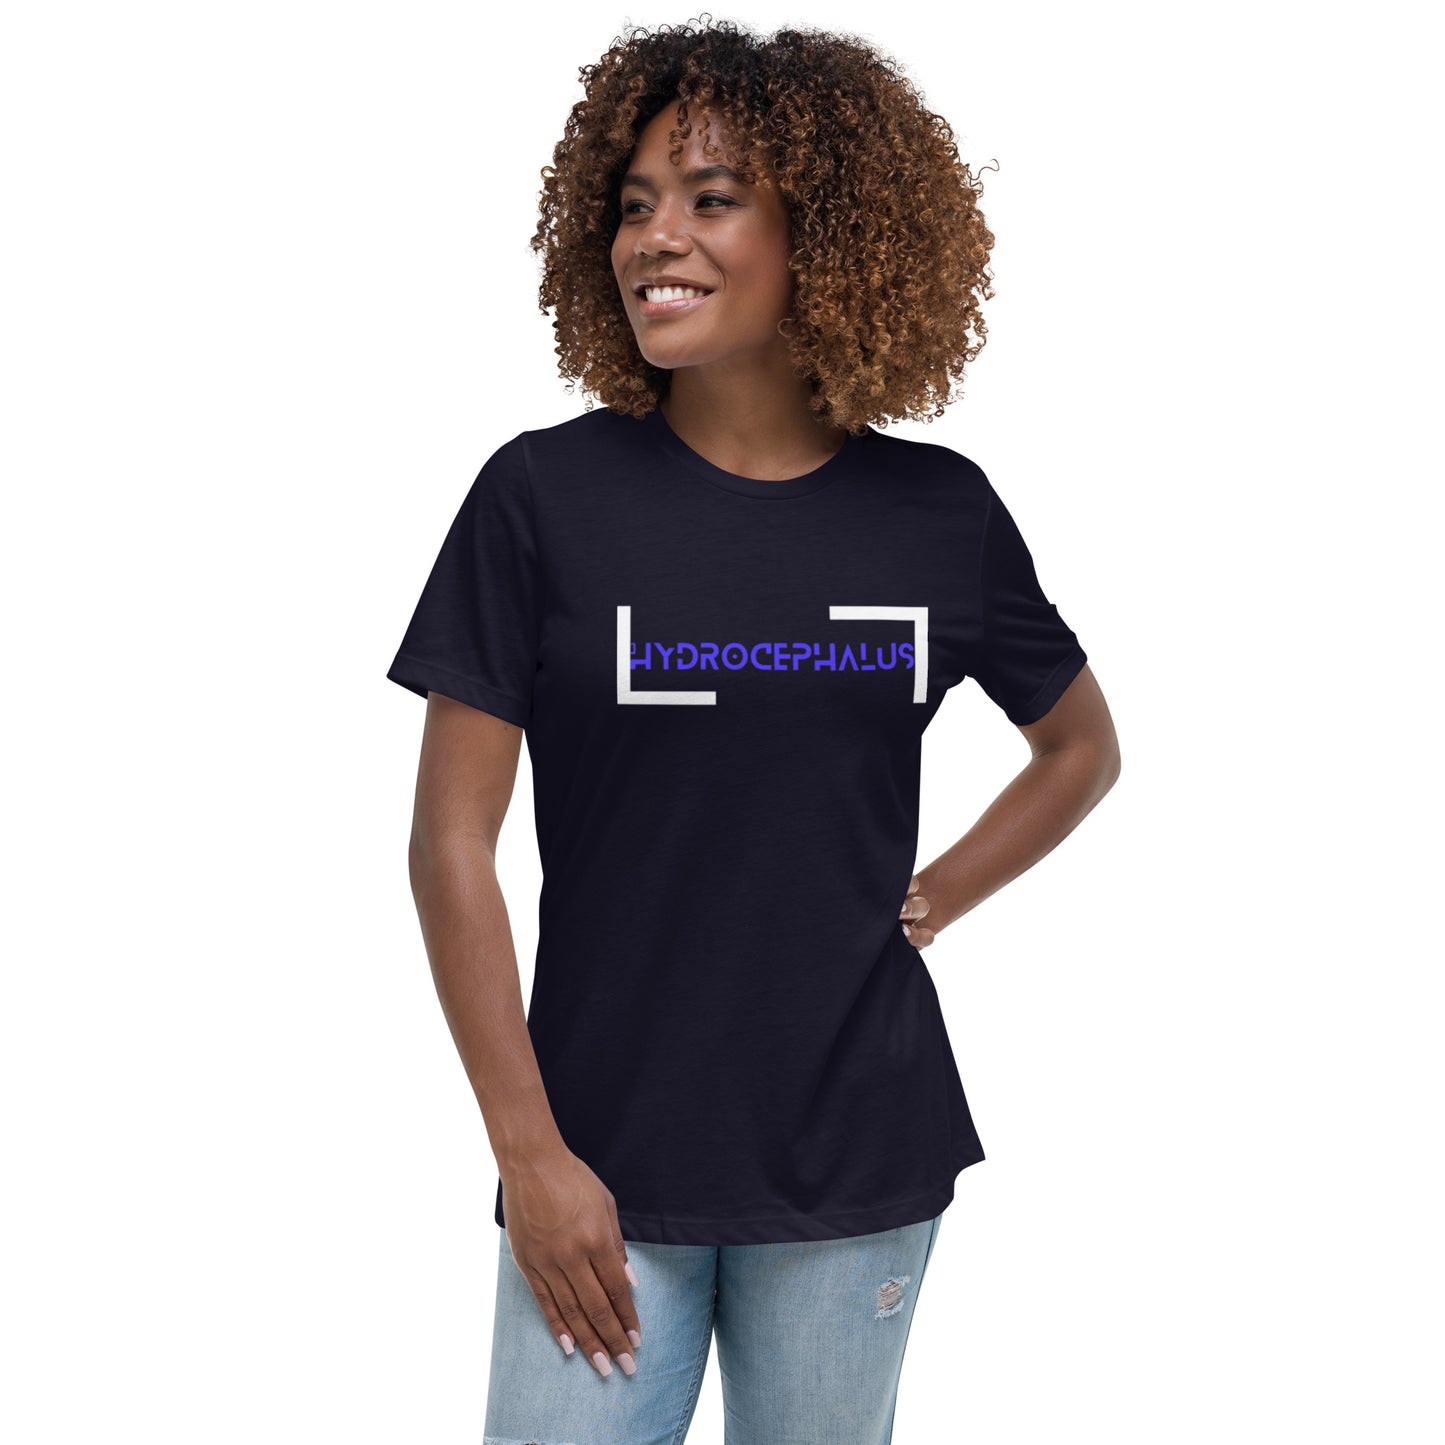 Hydrocephalus Women's Relaxed T-Shirt